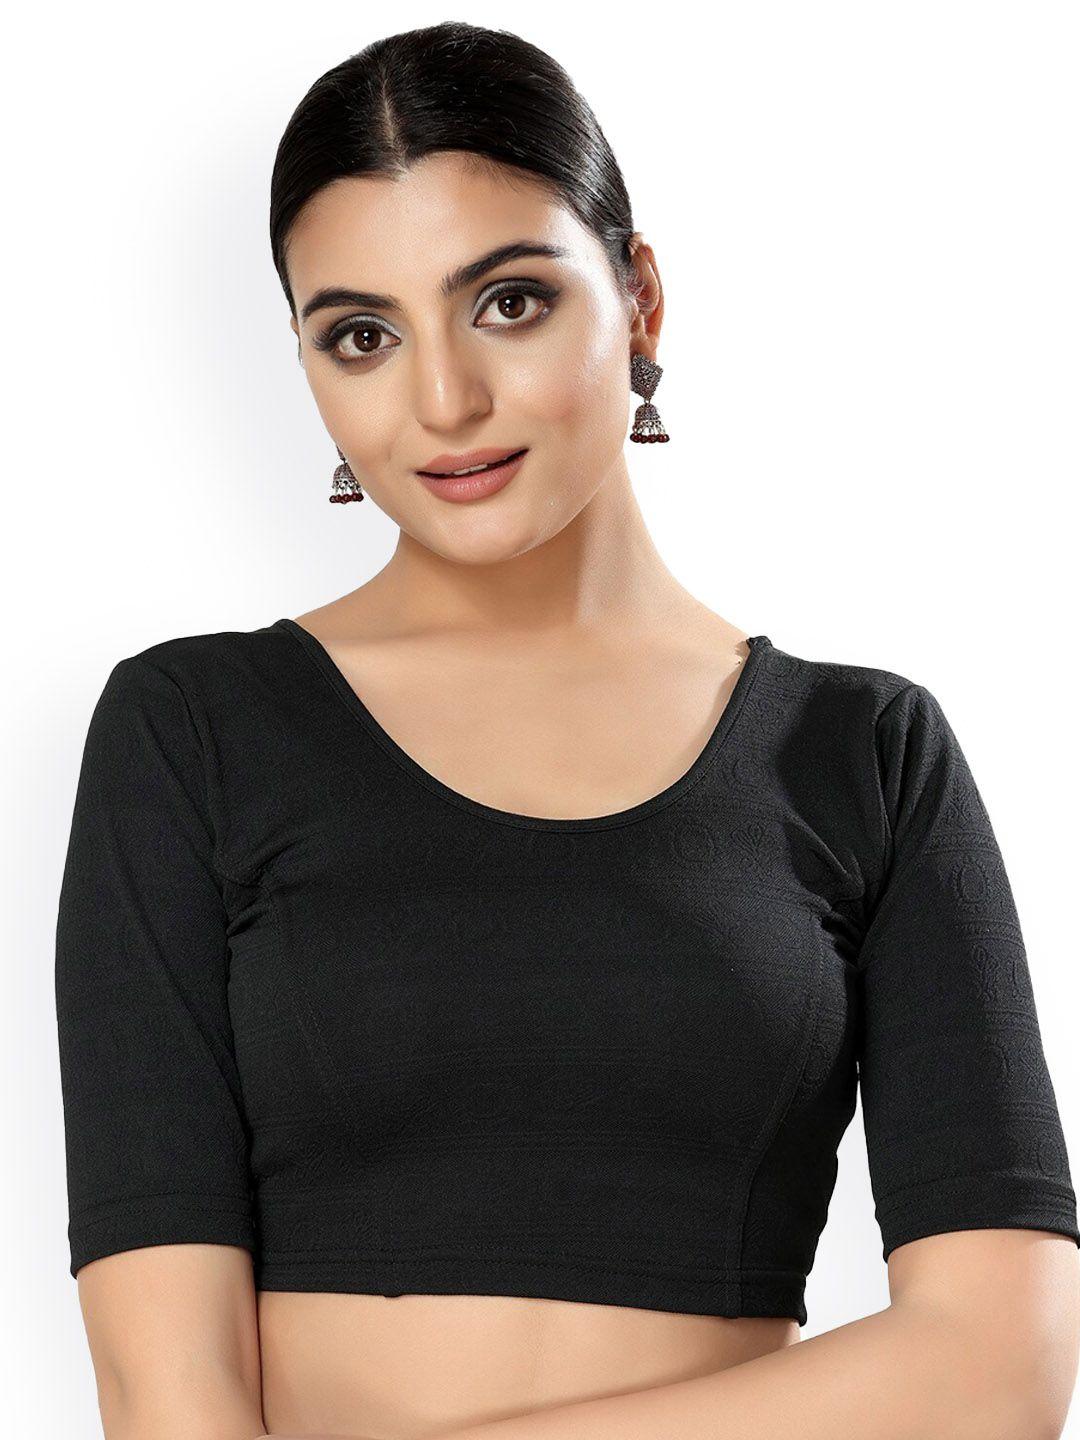 salwar studio round neck stretchable saree blouse